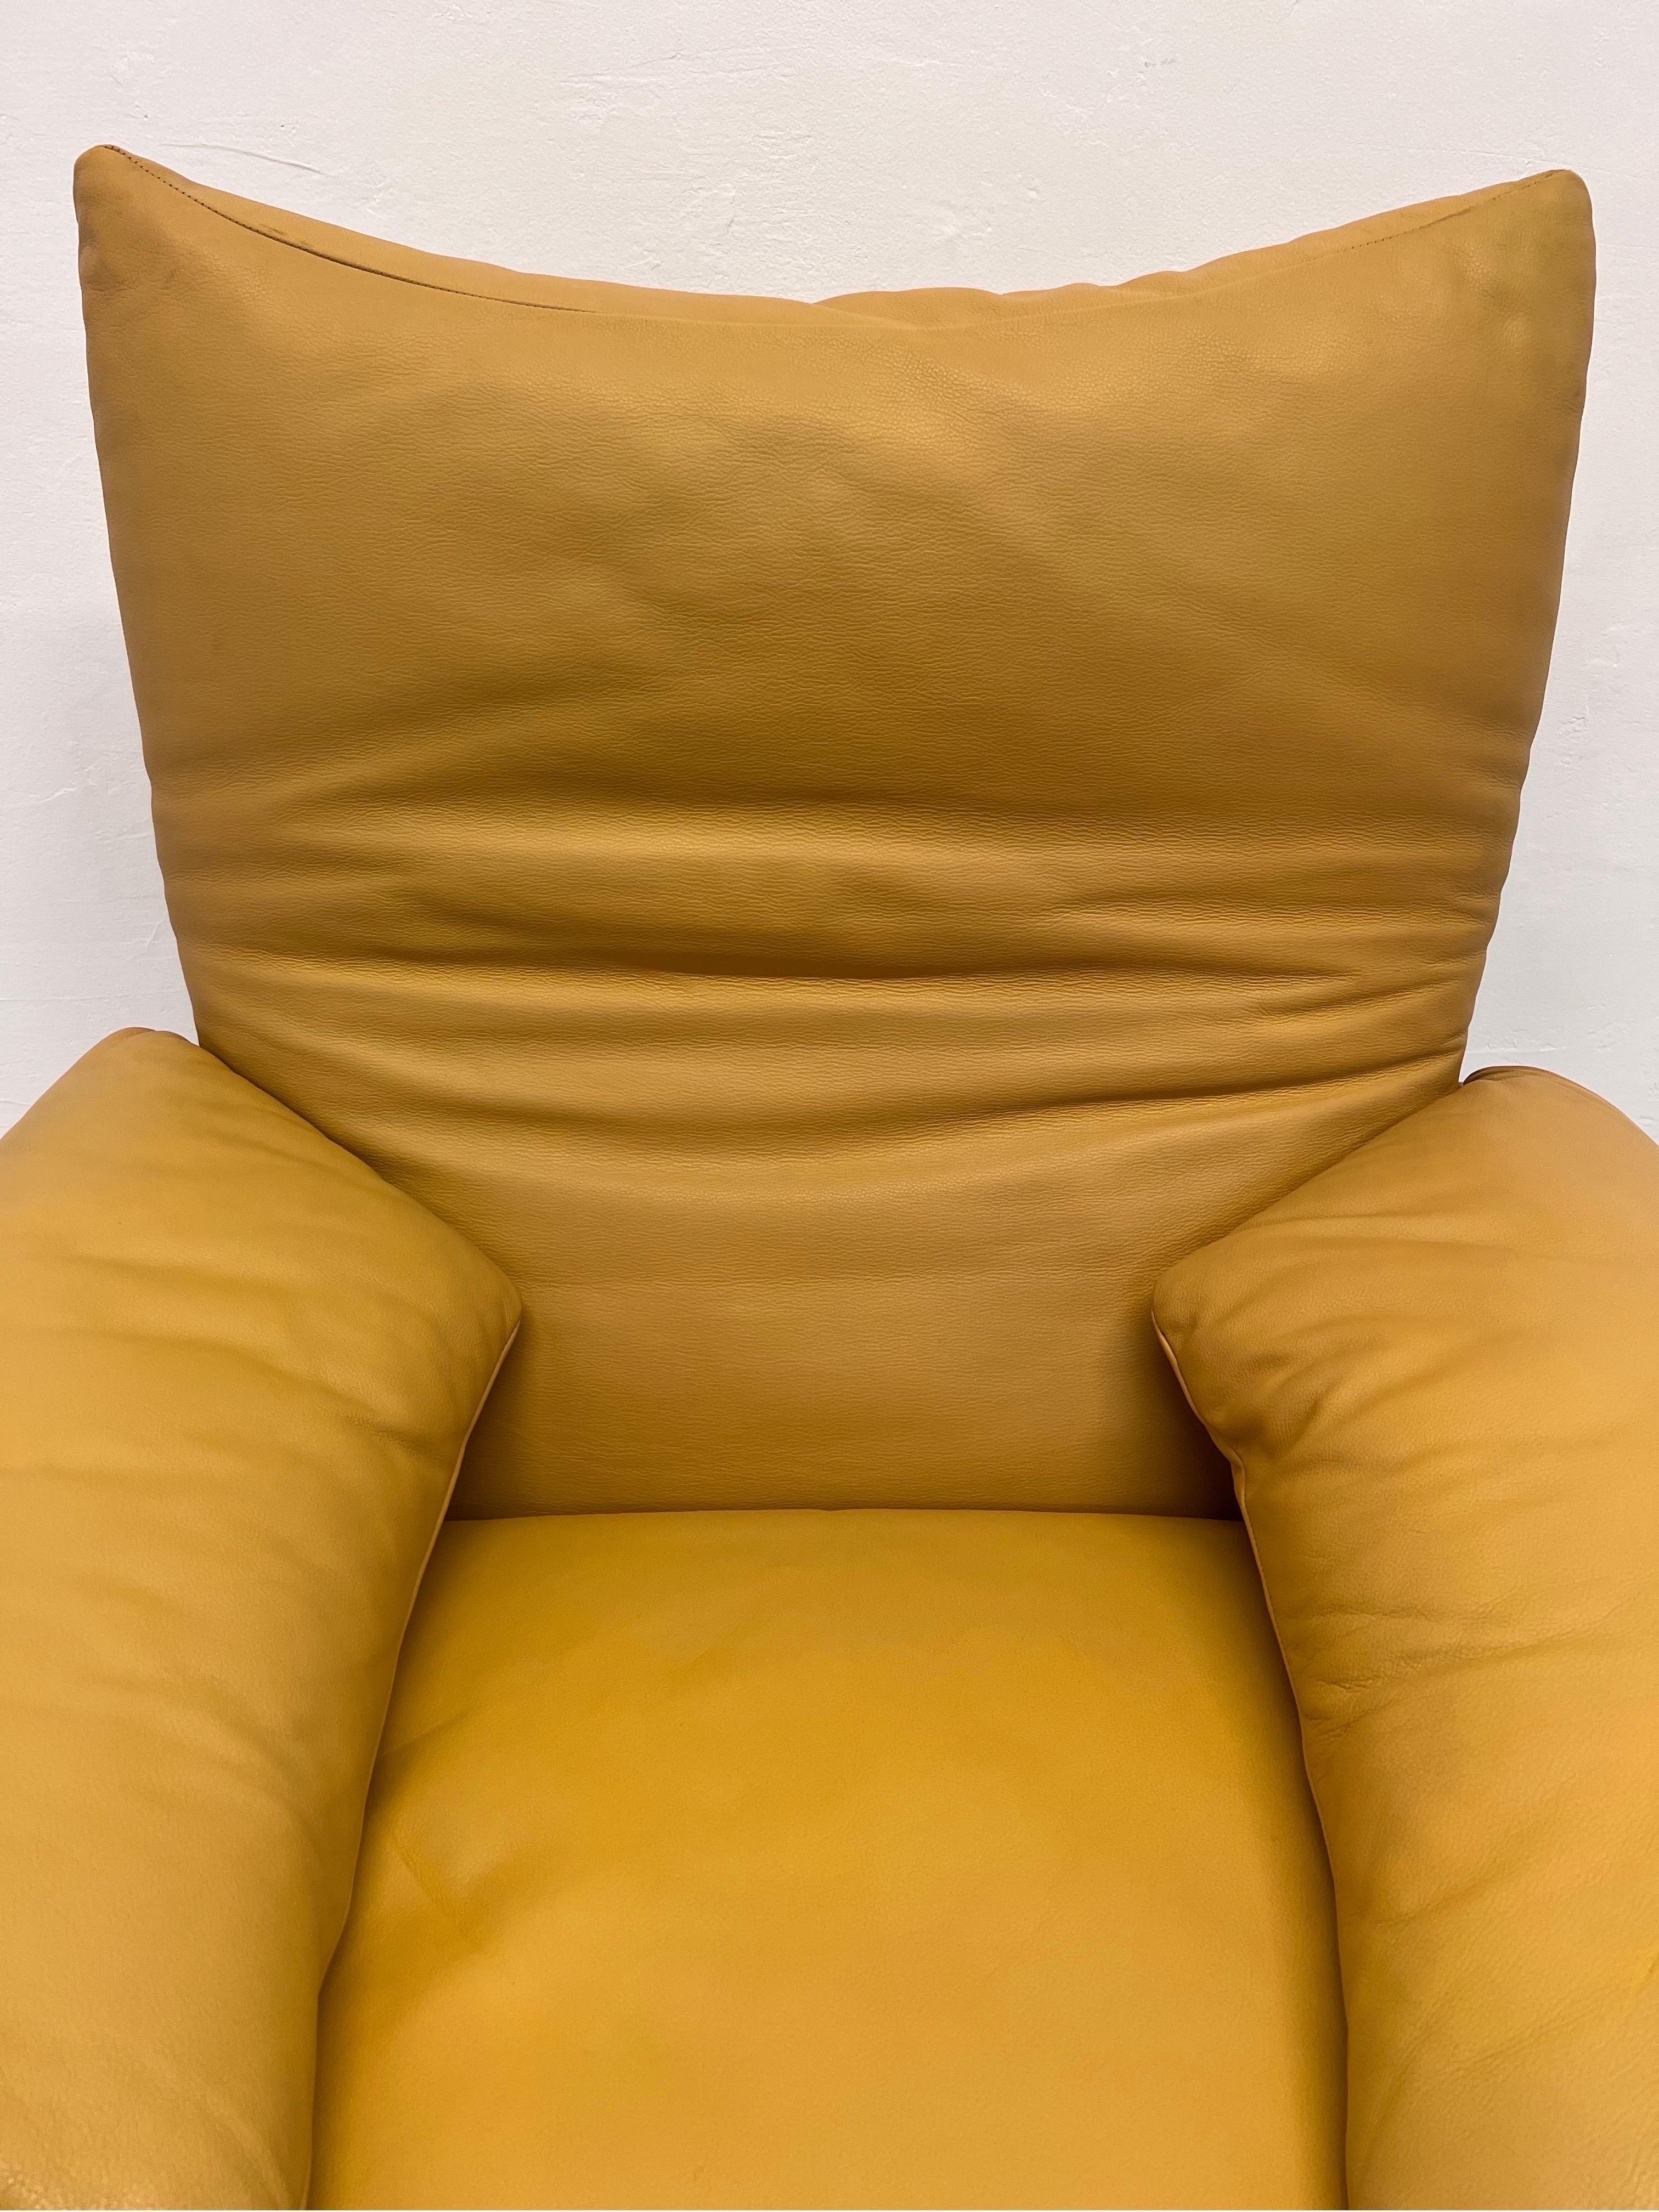 Vico Magistretti Maralunga Leather Lounge Chair for Cassina, 1980s 1